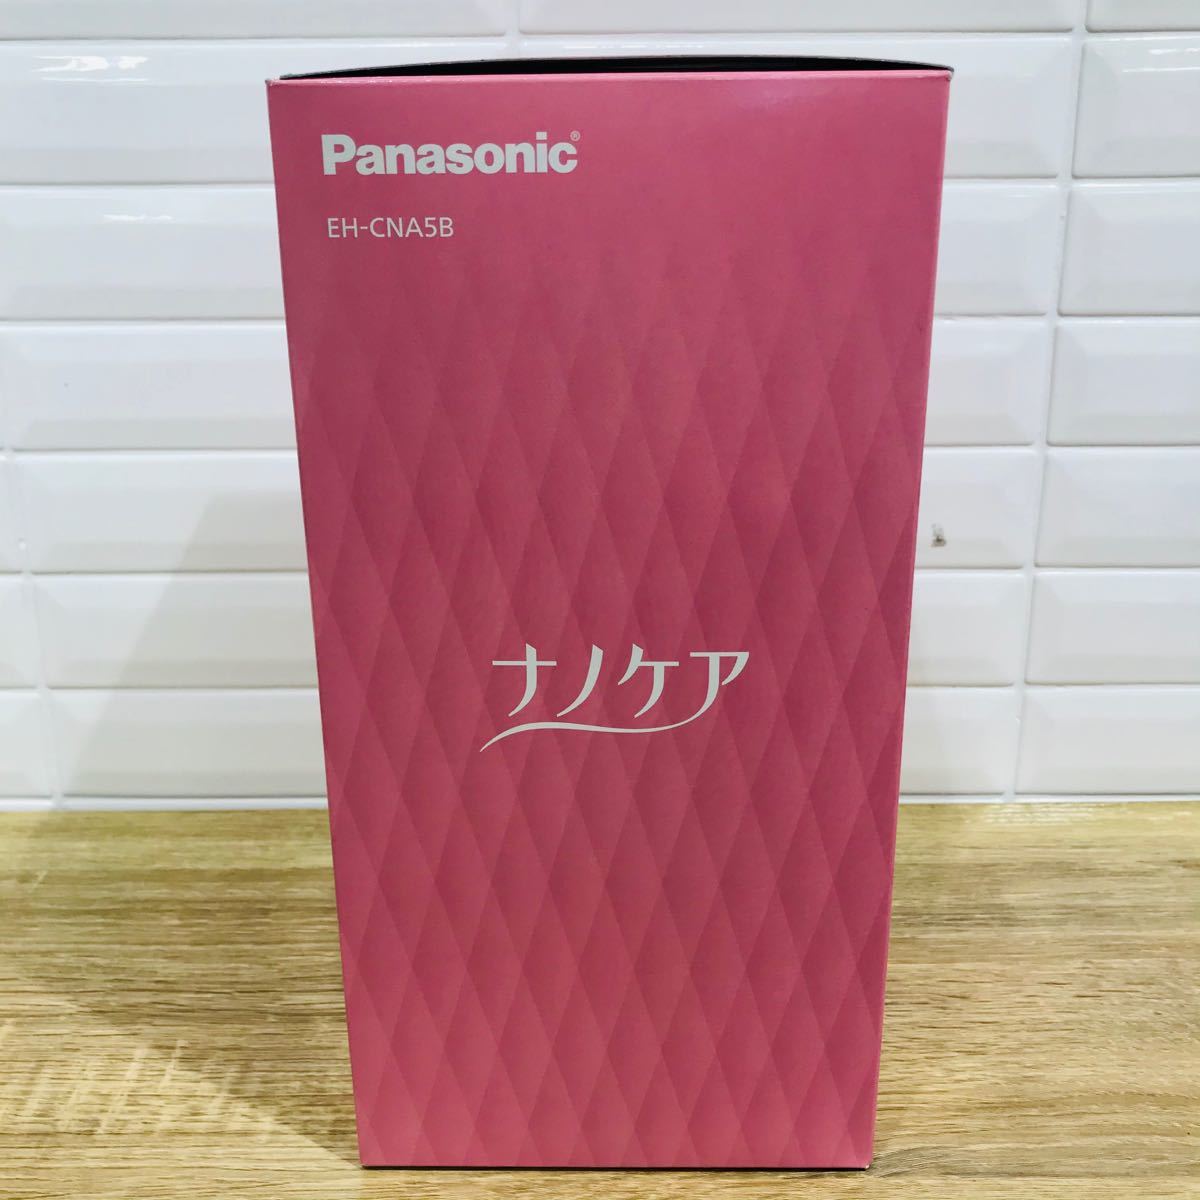 【Panasonic】パナソニック ドライヤー ナノケア EH-CNA5B-PP